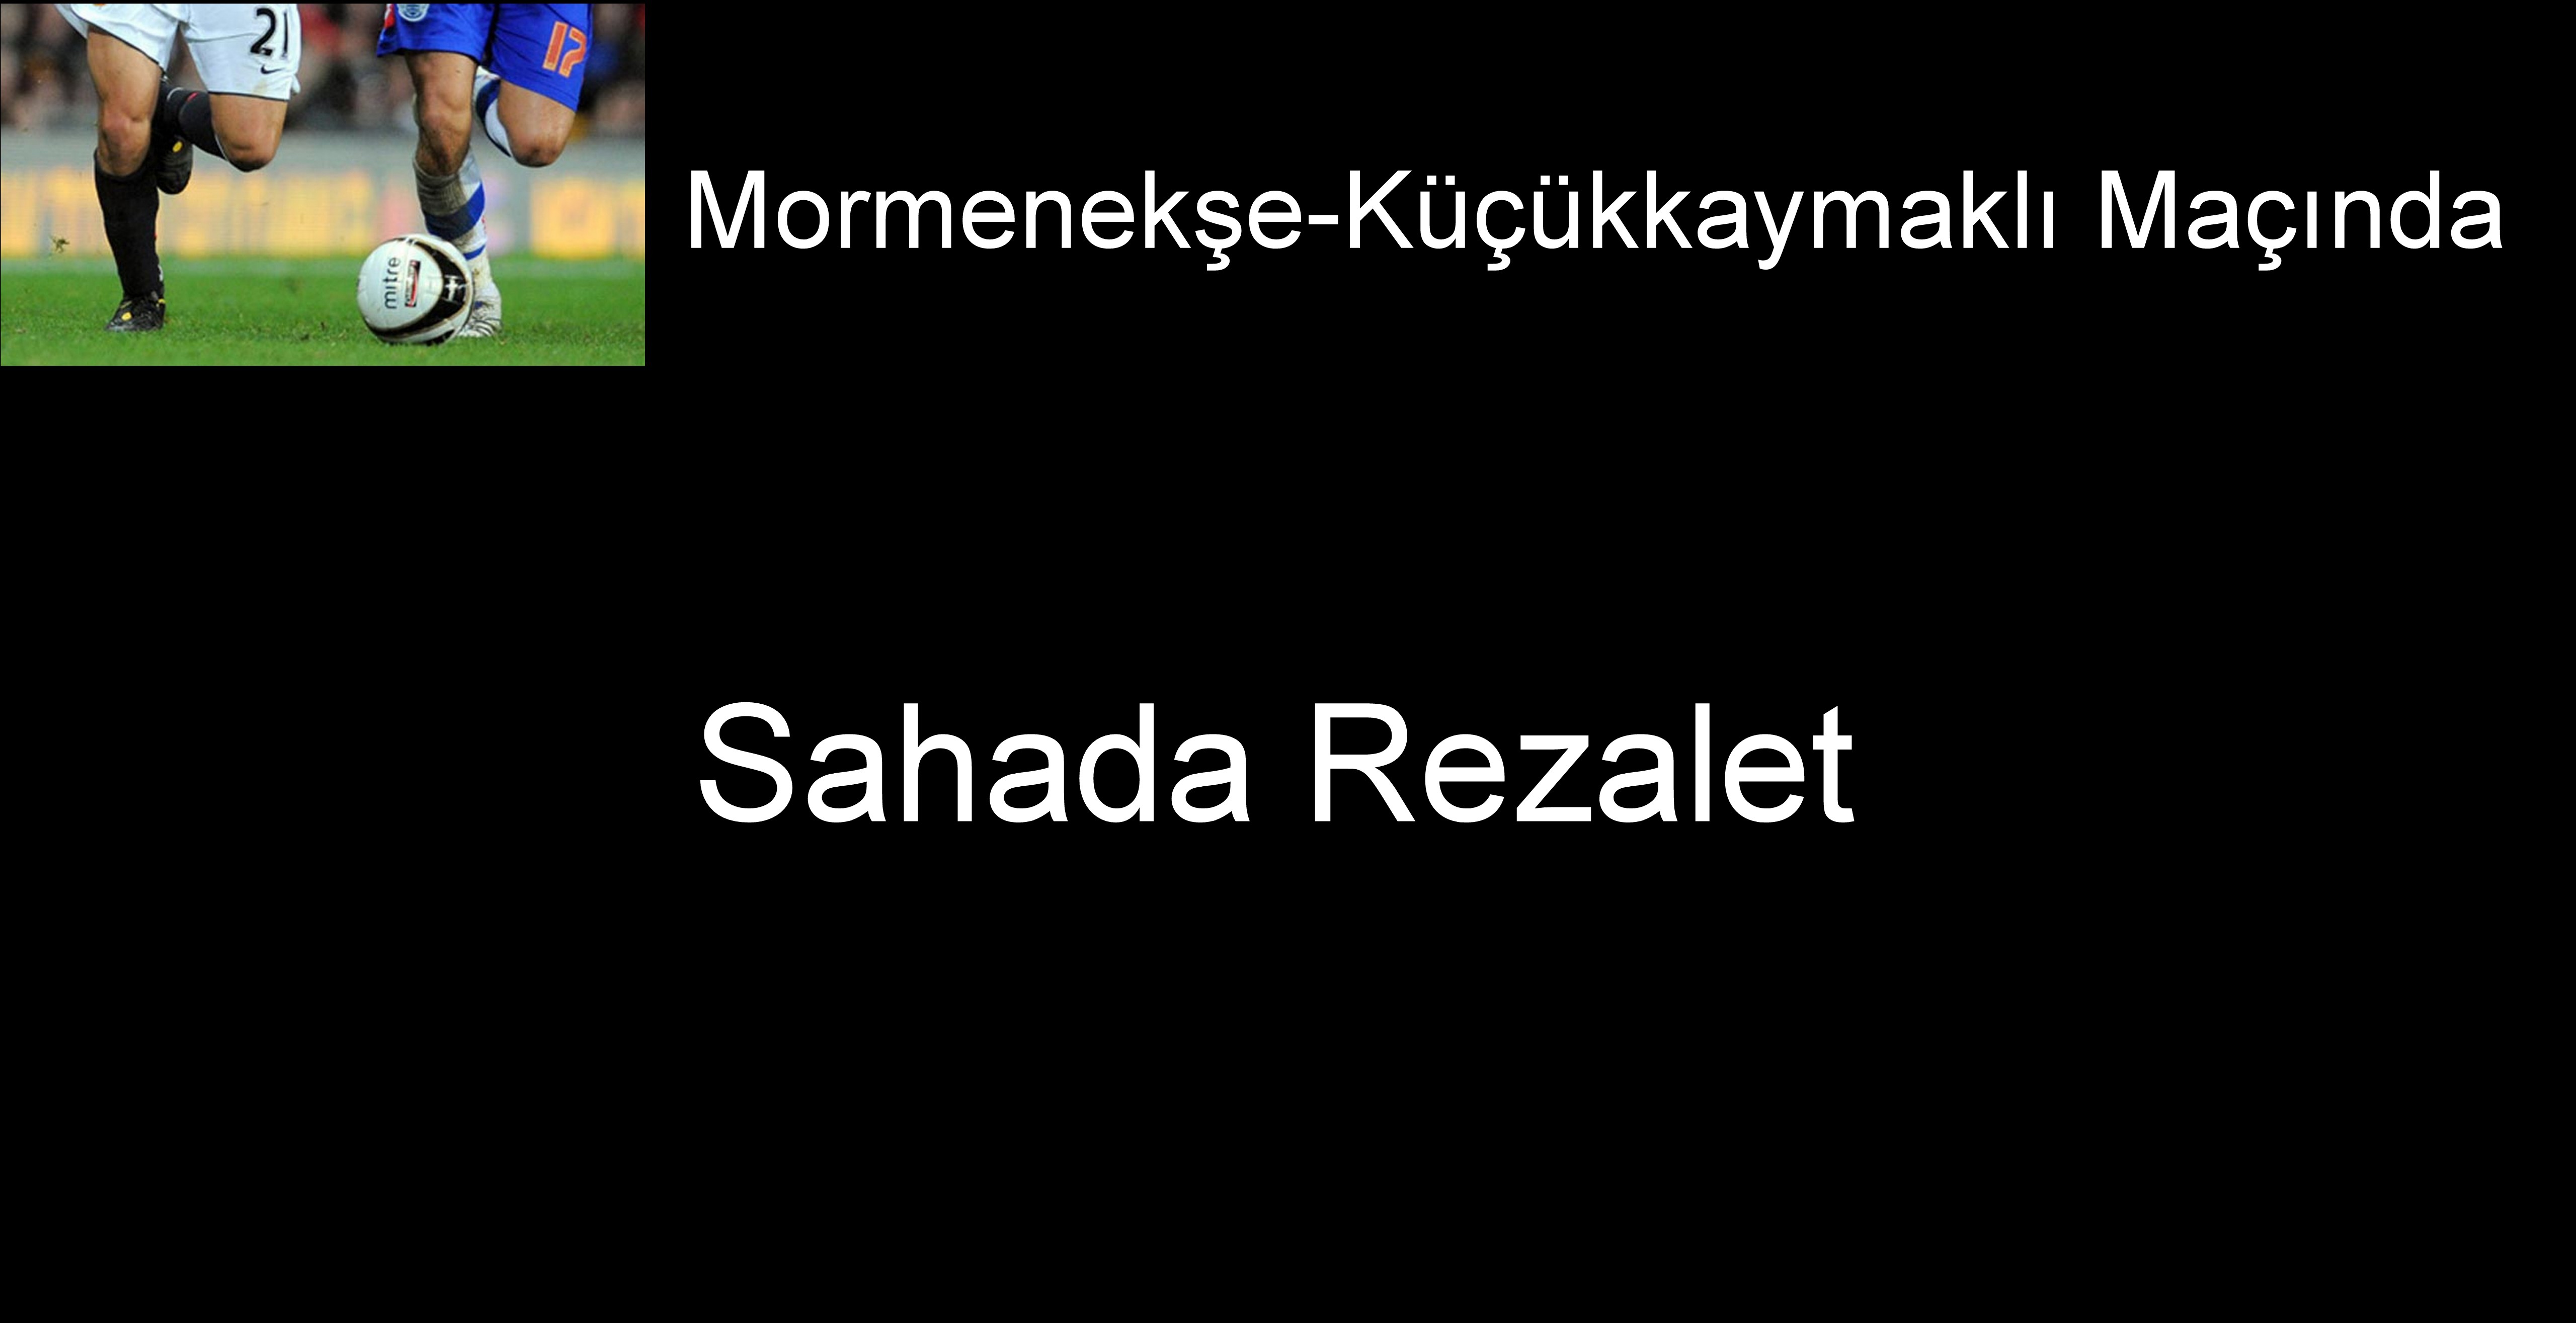 SAHADA REZALET